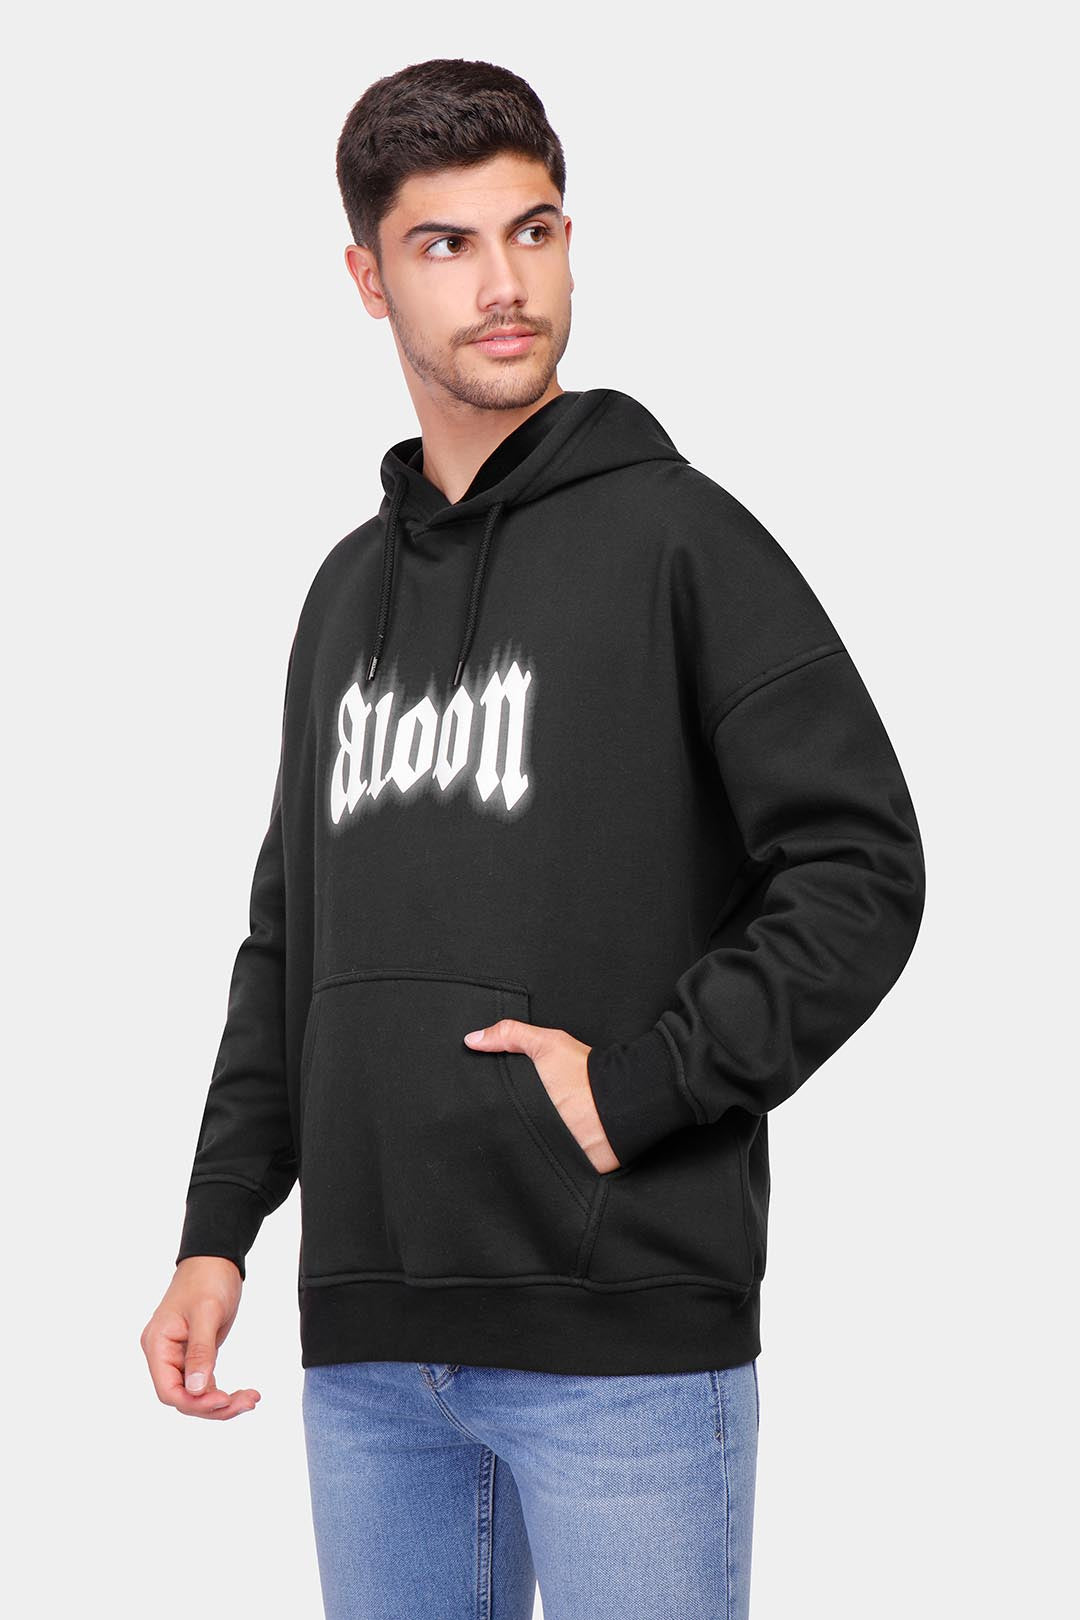 Black Hoodie Over Size Sweatshirt